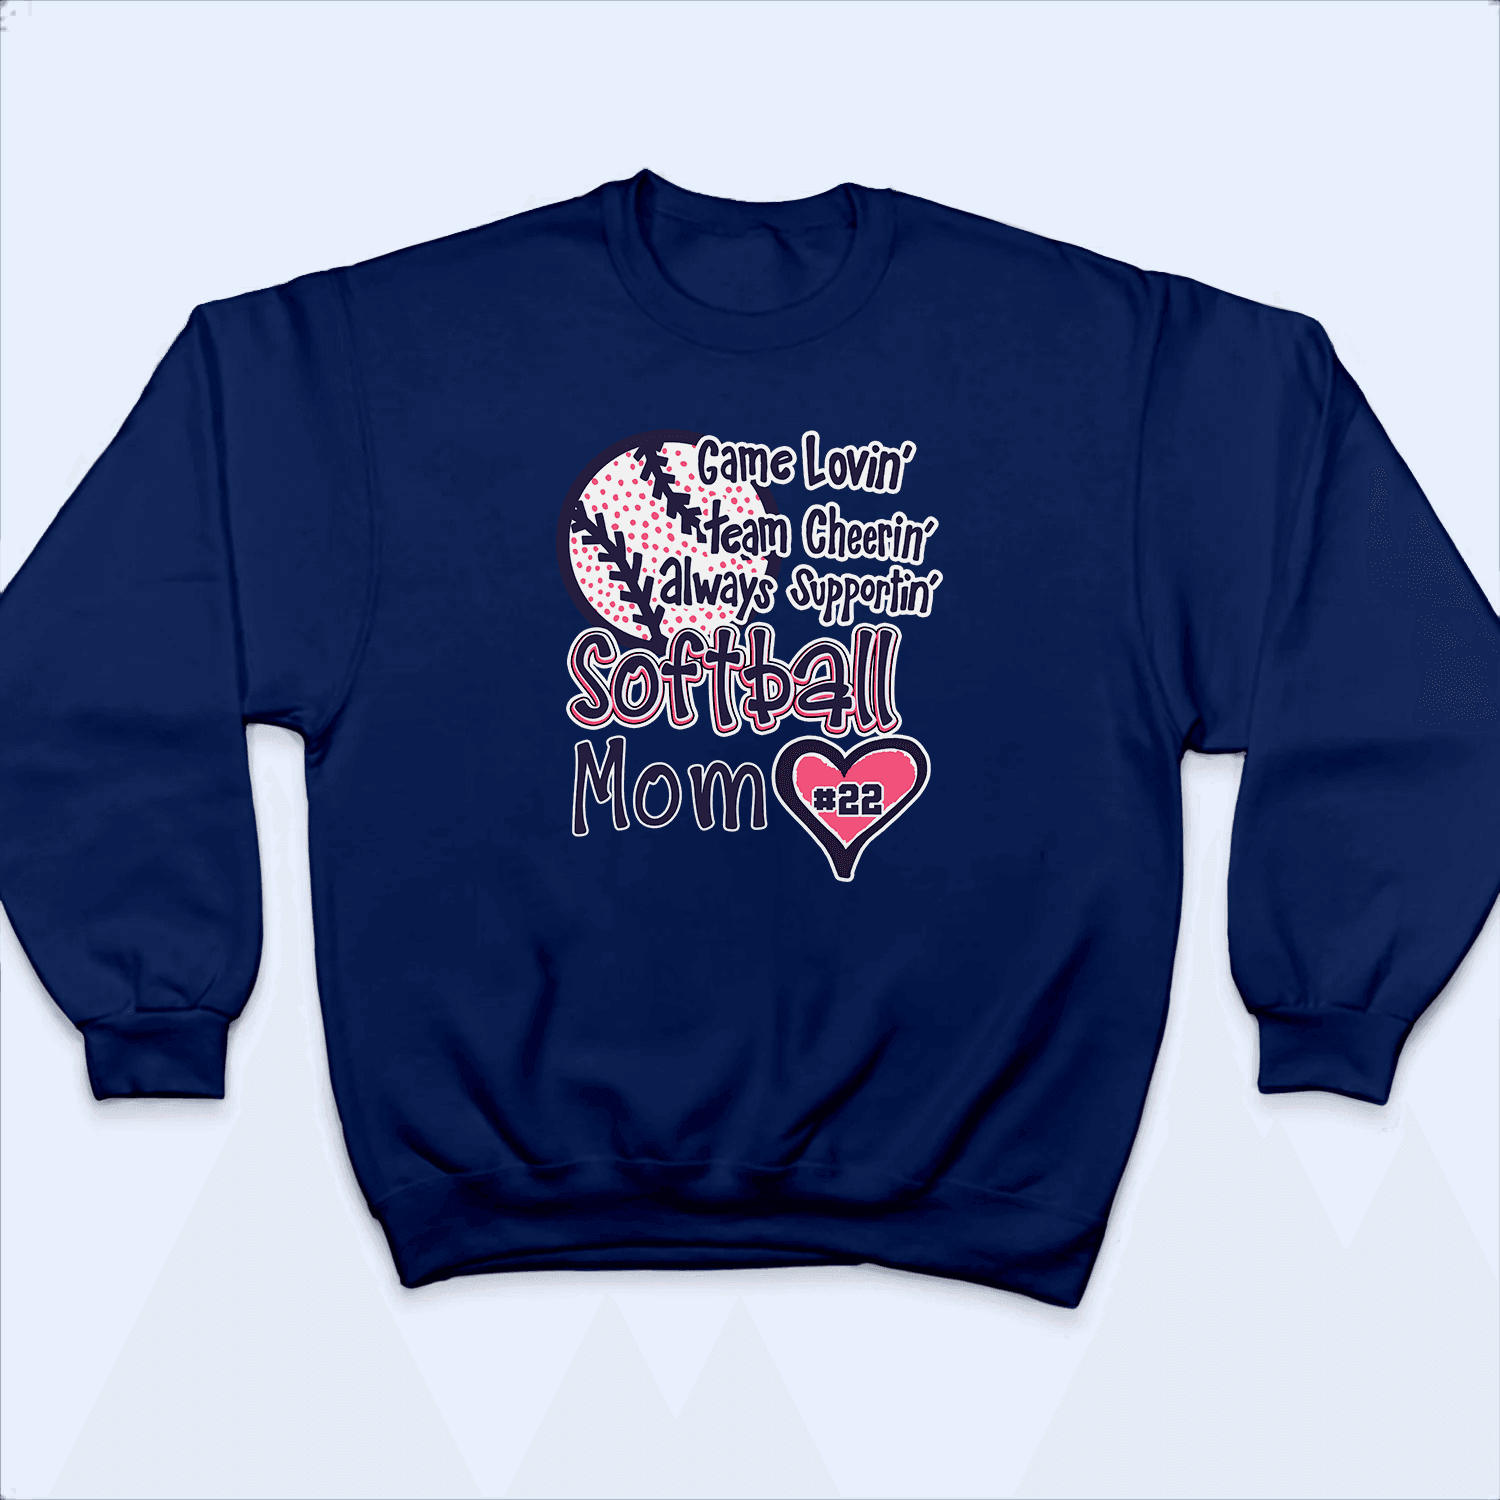 Game Lovin' Always Supportin' Polka Dots - Baseball/ Softball Cheers Personalized Custom T Shirt - Birthday, Loving, Funny Gift for Grandma/Nana/Mimi, Mom, Wife, Grandparent - Suzitee Store